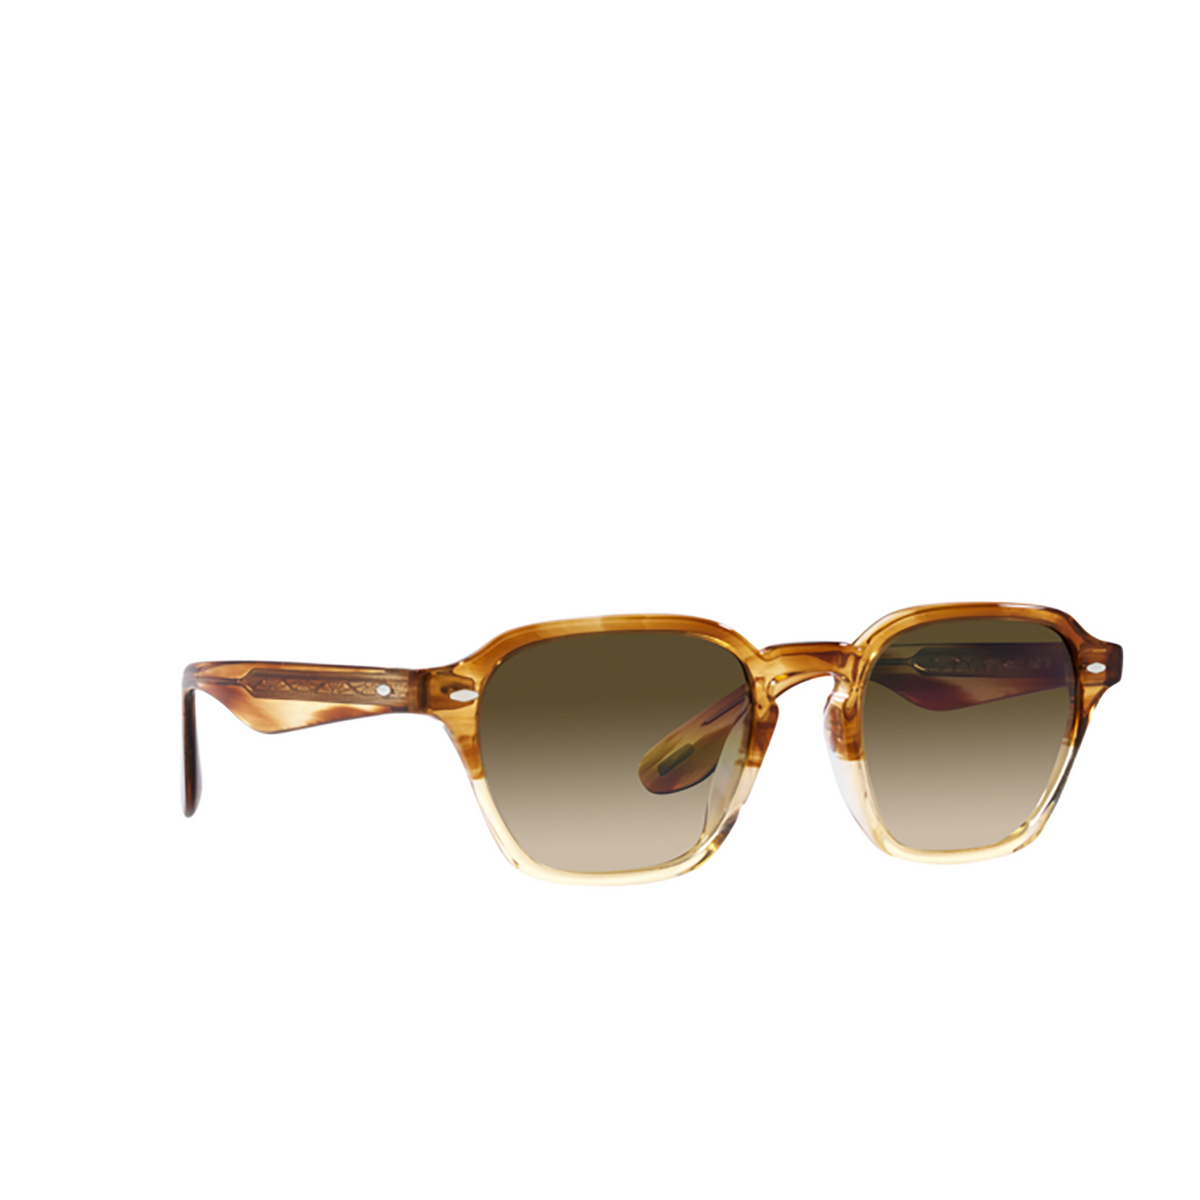 Oliver Peoples GRIFFO Sunglasses 167485 Honey vsb - three-quarters view